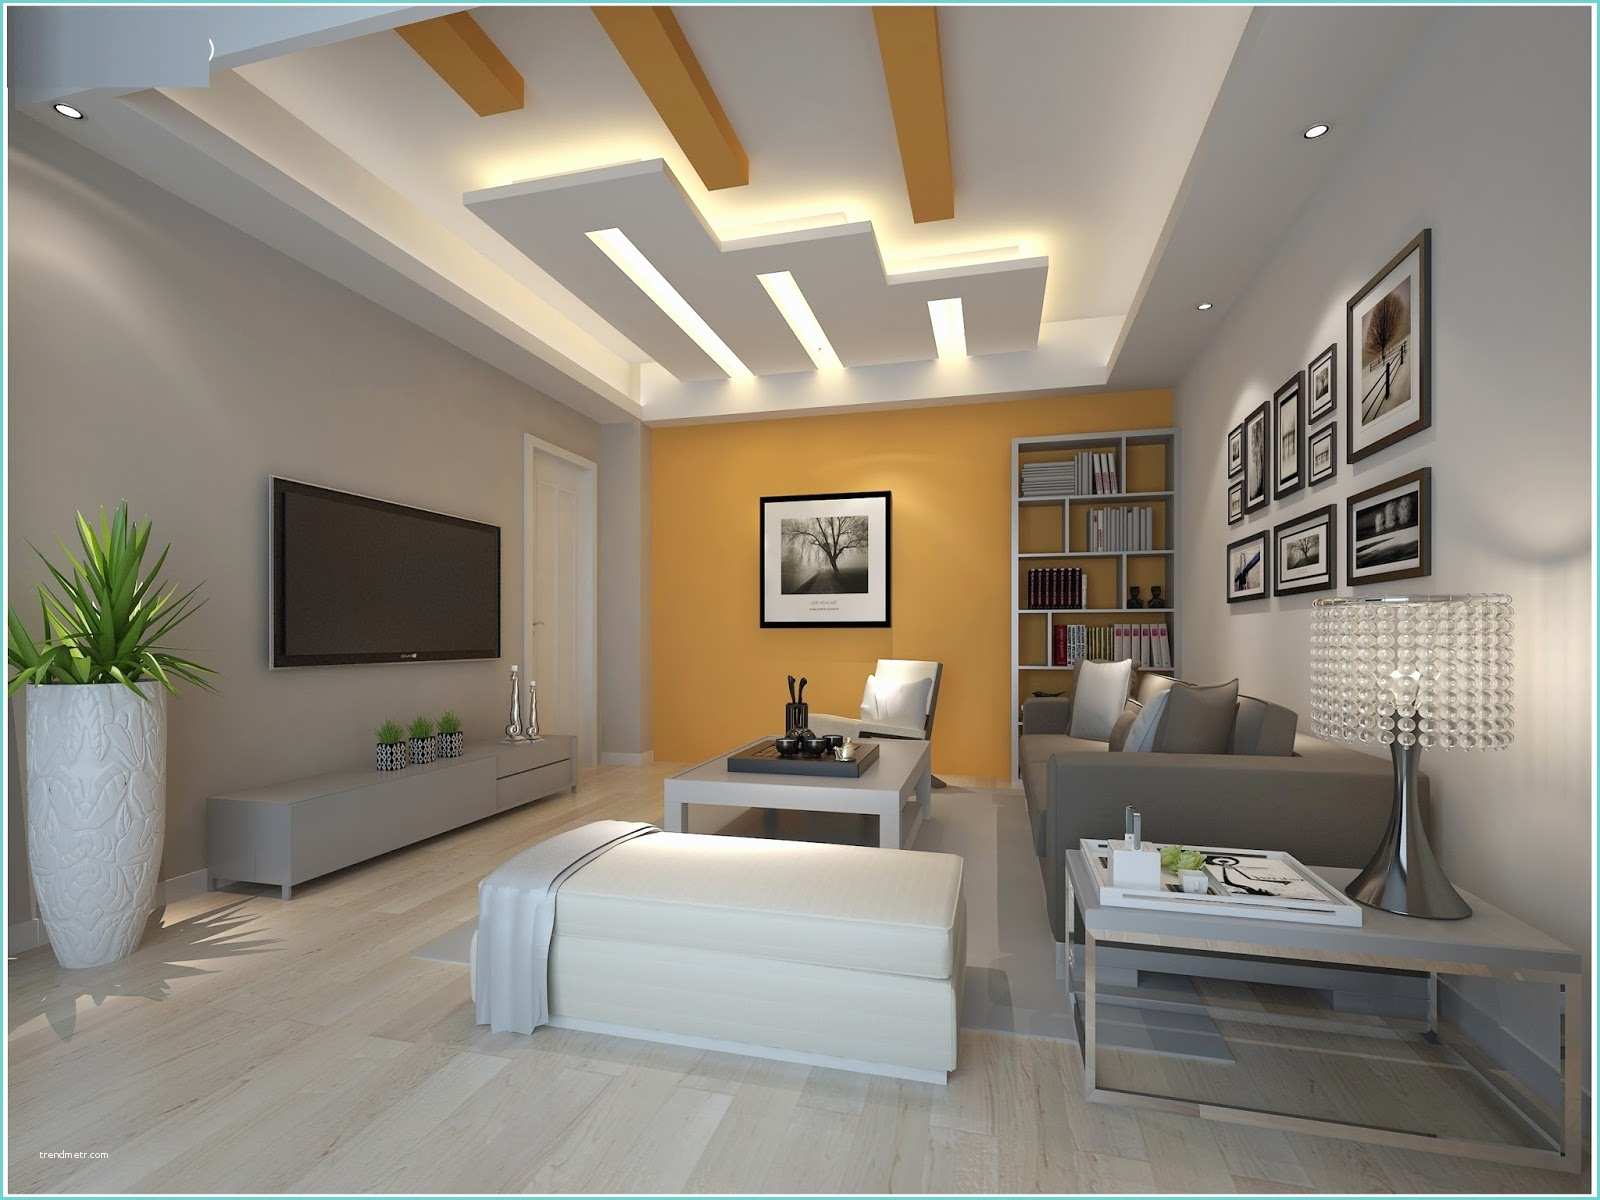 Plaster Of Paris Design for Bedroom for Ceiling P O P Design Bedroom Wallpaper Hd Home